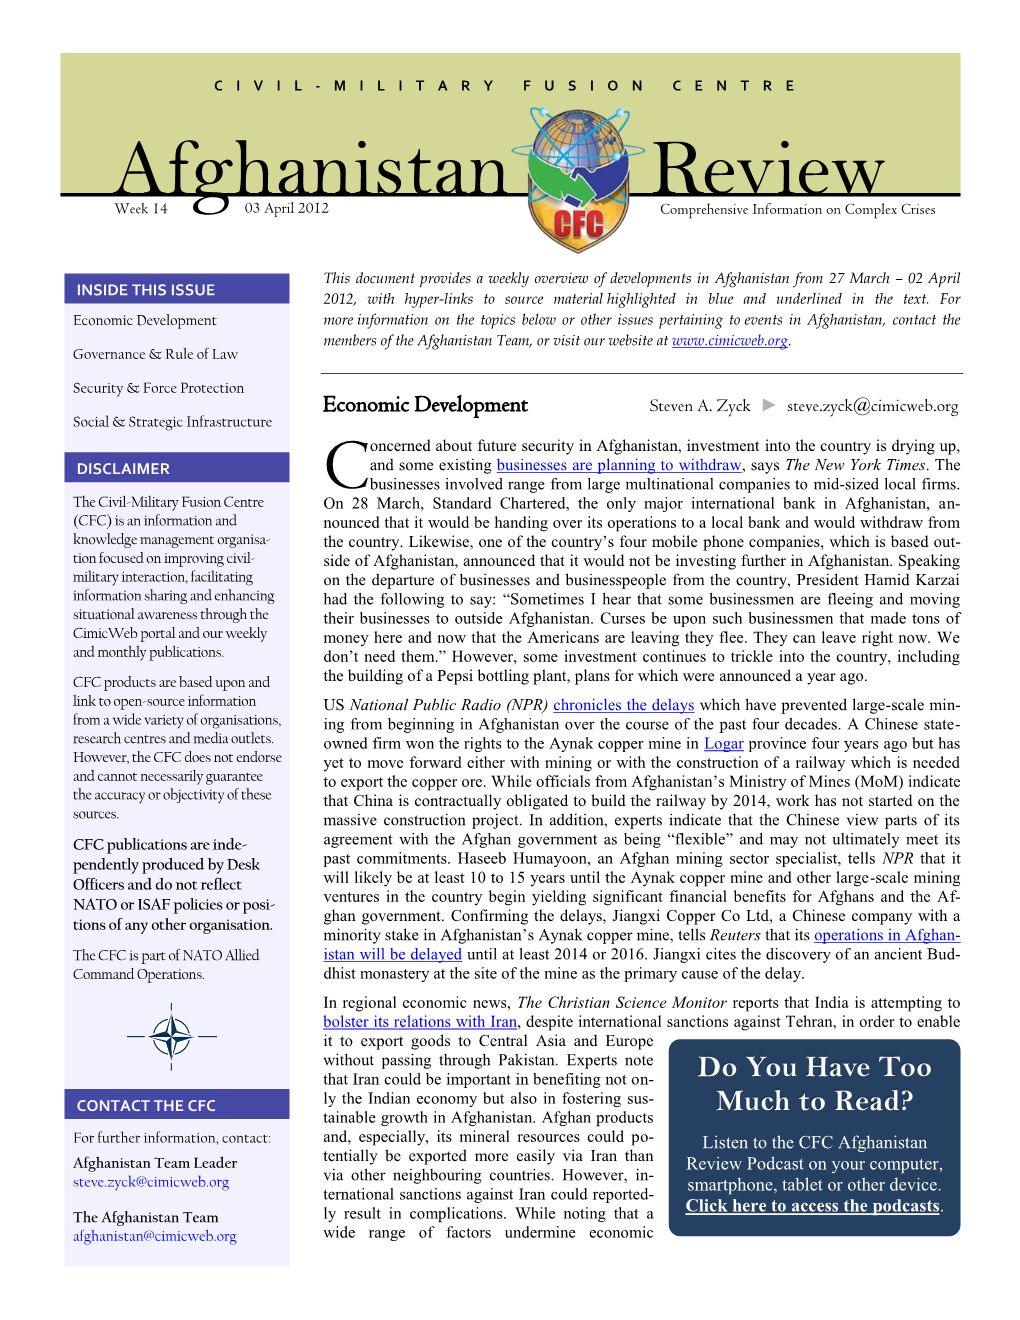 Afghanistan Review Week 14 03 April 2012 Comprehensive Information on Complex Crises